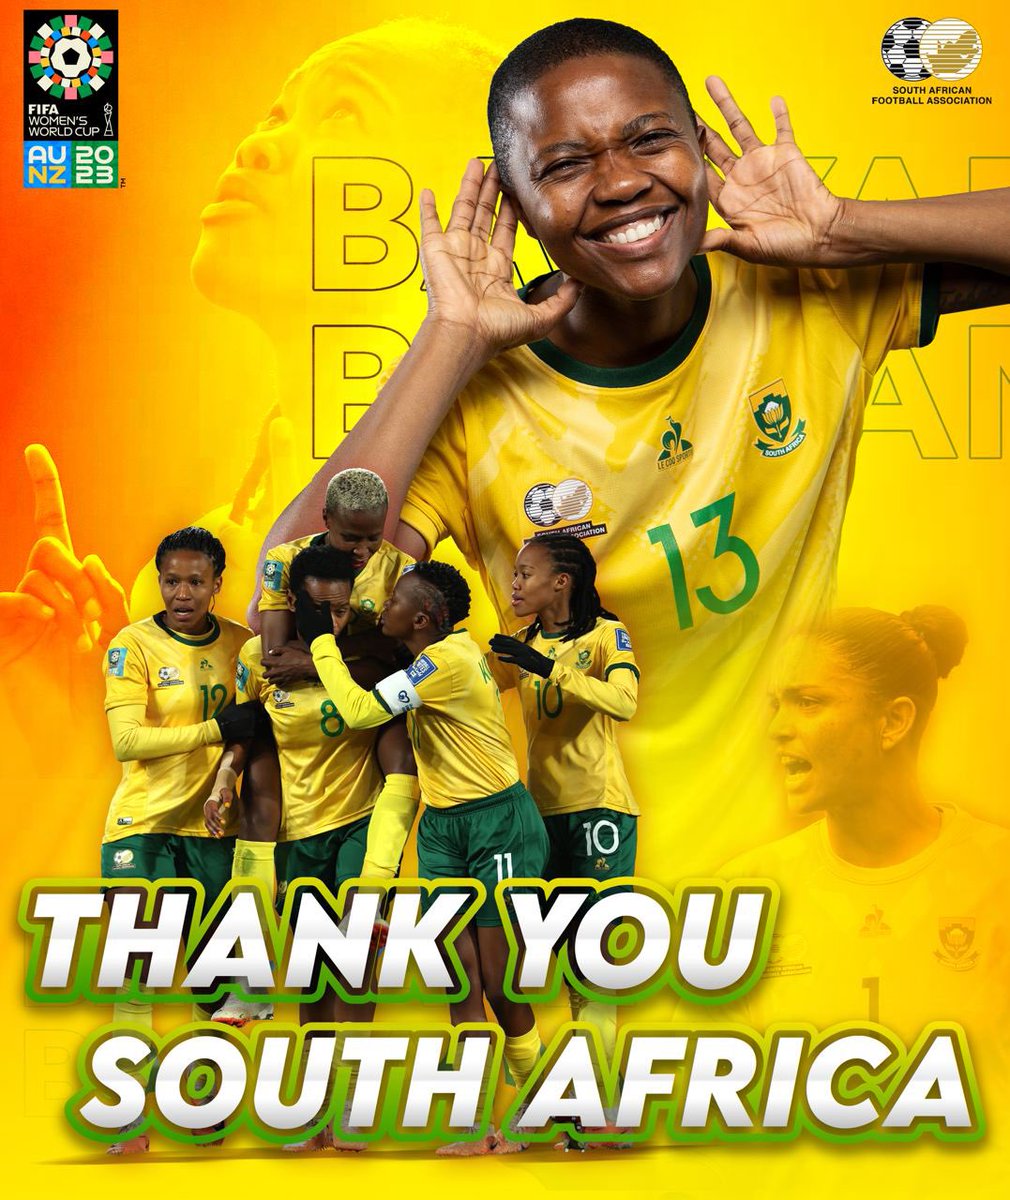 Mzansi Thank You for supporting Banyana Banyana💚💛🇿🇦 #BeyondGreatness #FIFAWWC